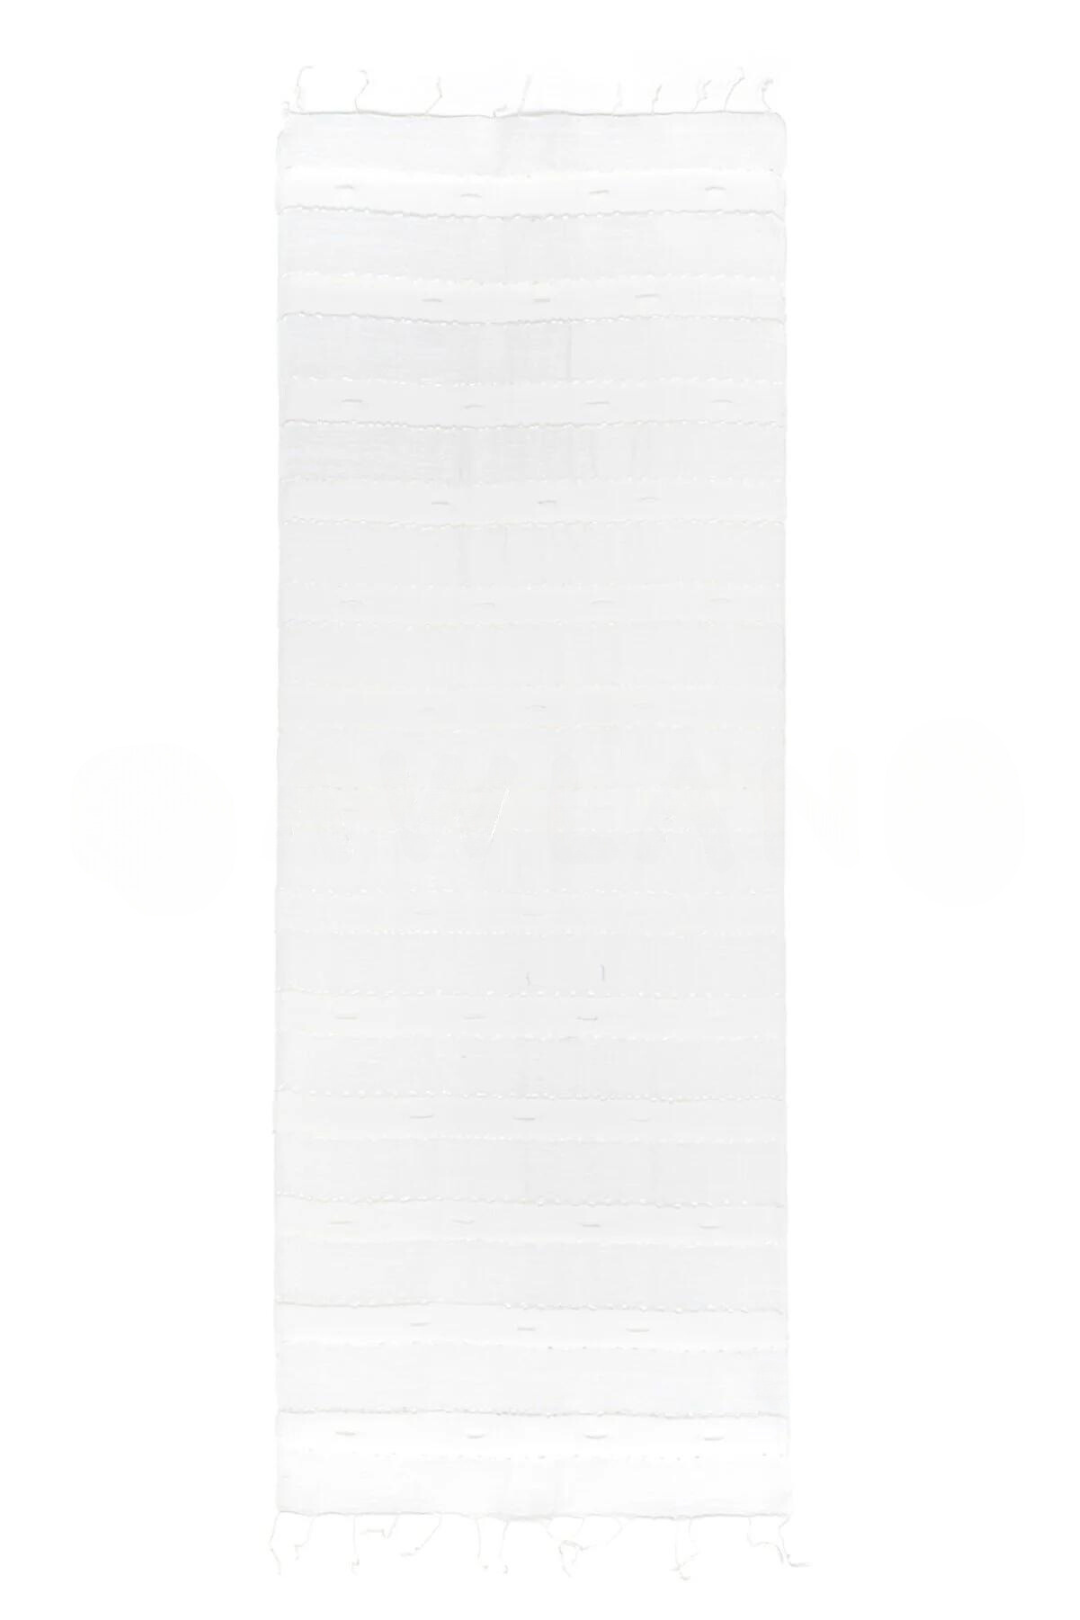 Silk Organza Sheer Uniform Colors - White